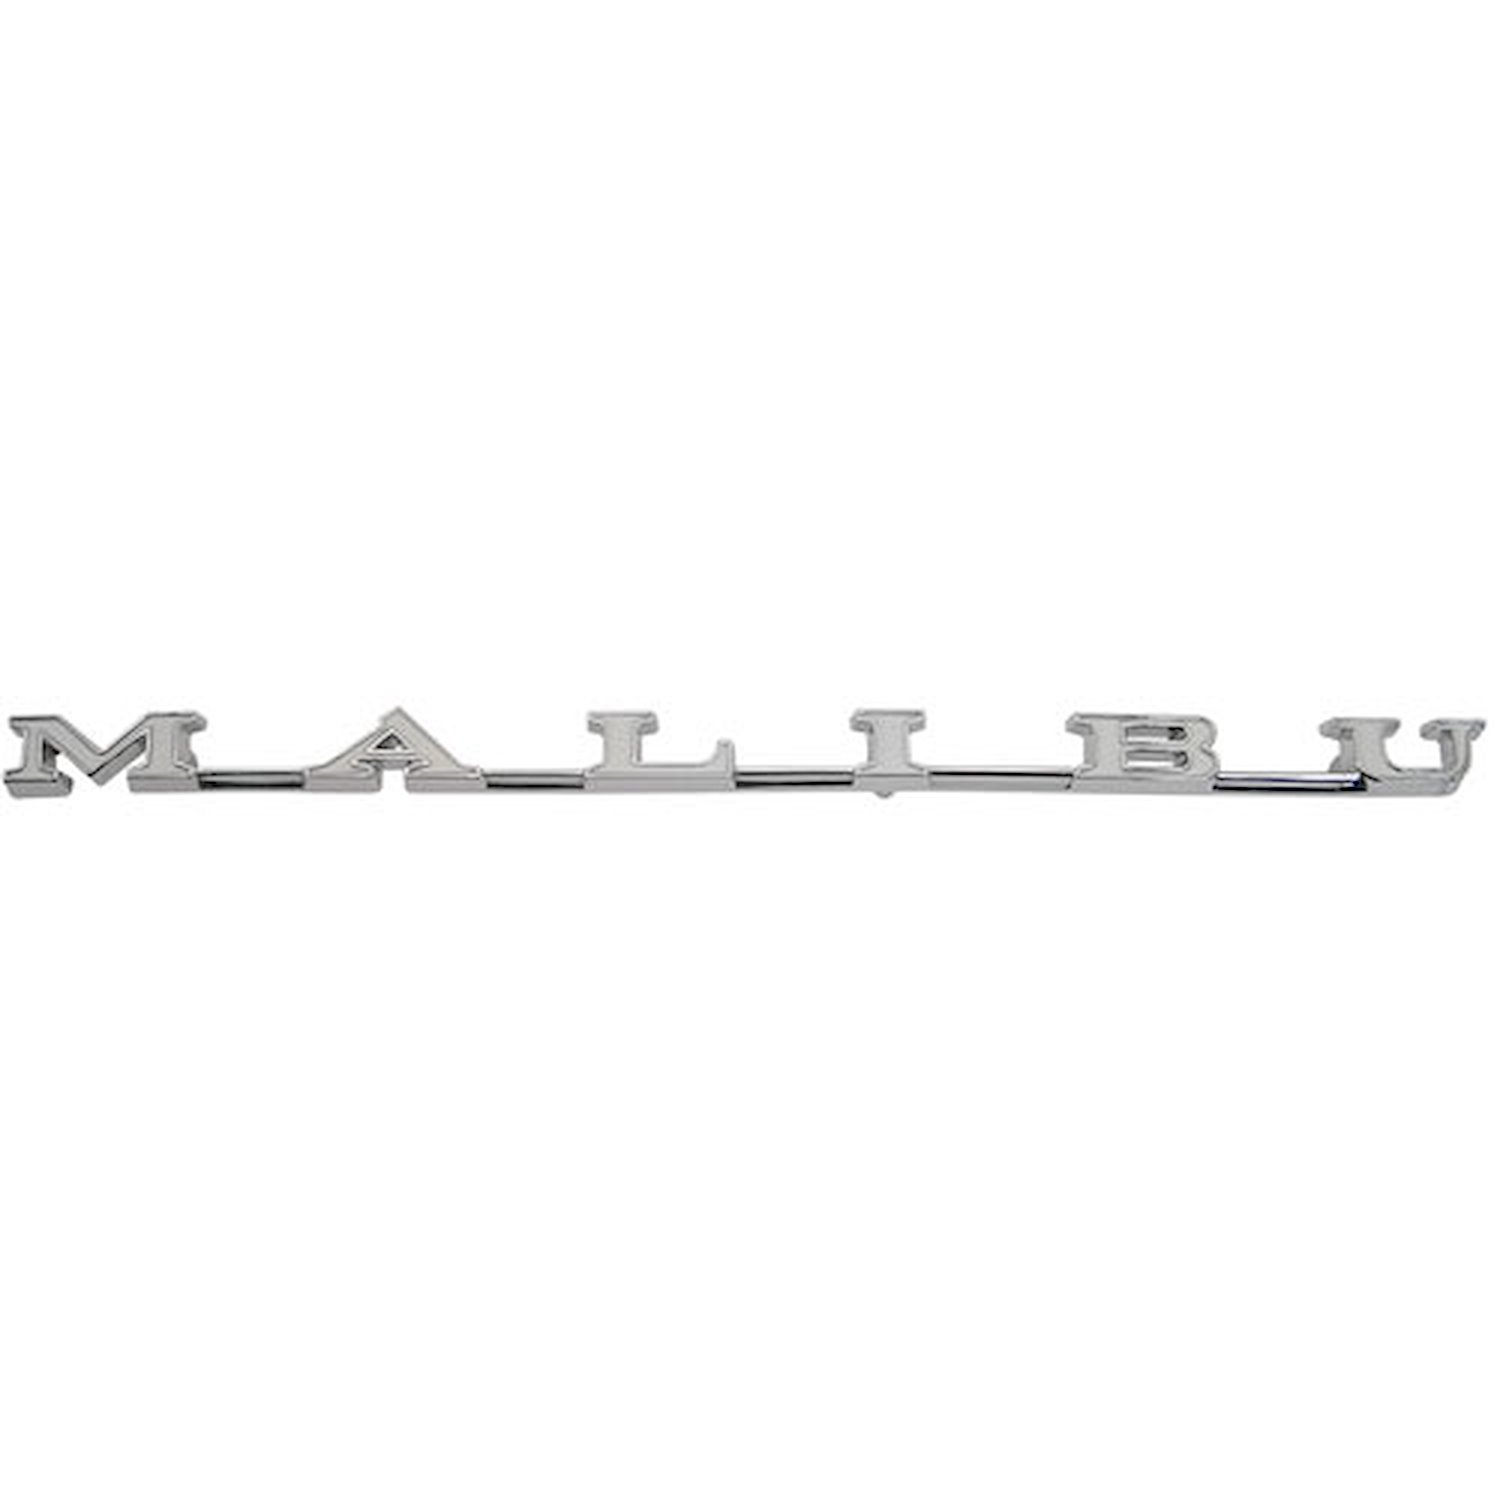 Rear Quarter Emblem 1969 Chevy Chevelle Malibu